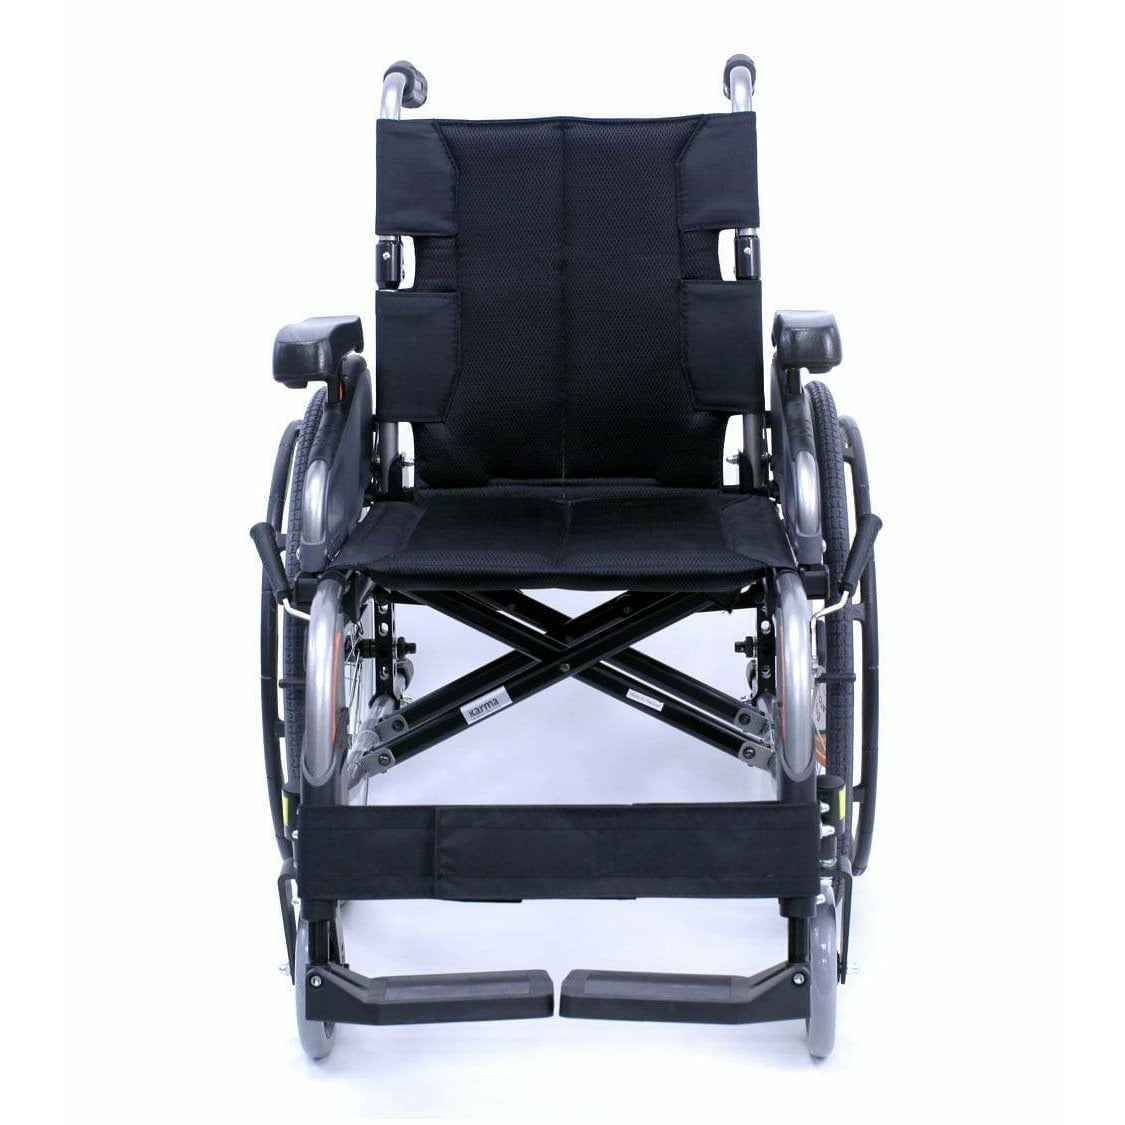 Karman Healthcare Flexx KM8522Q Ultra Lightweight Manual Wheelchair